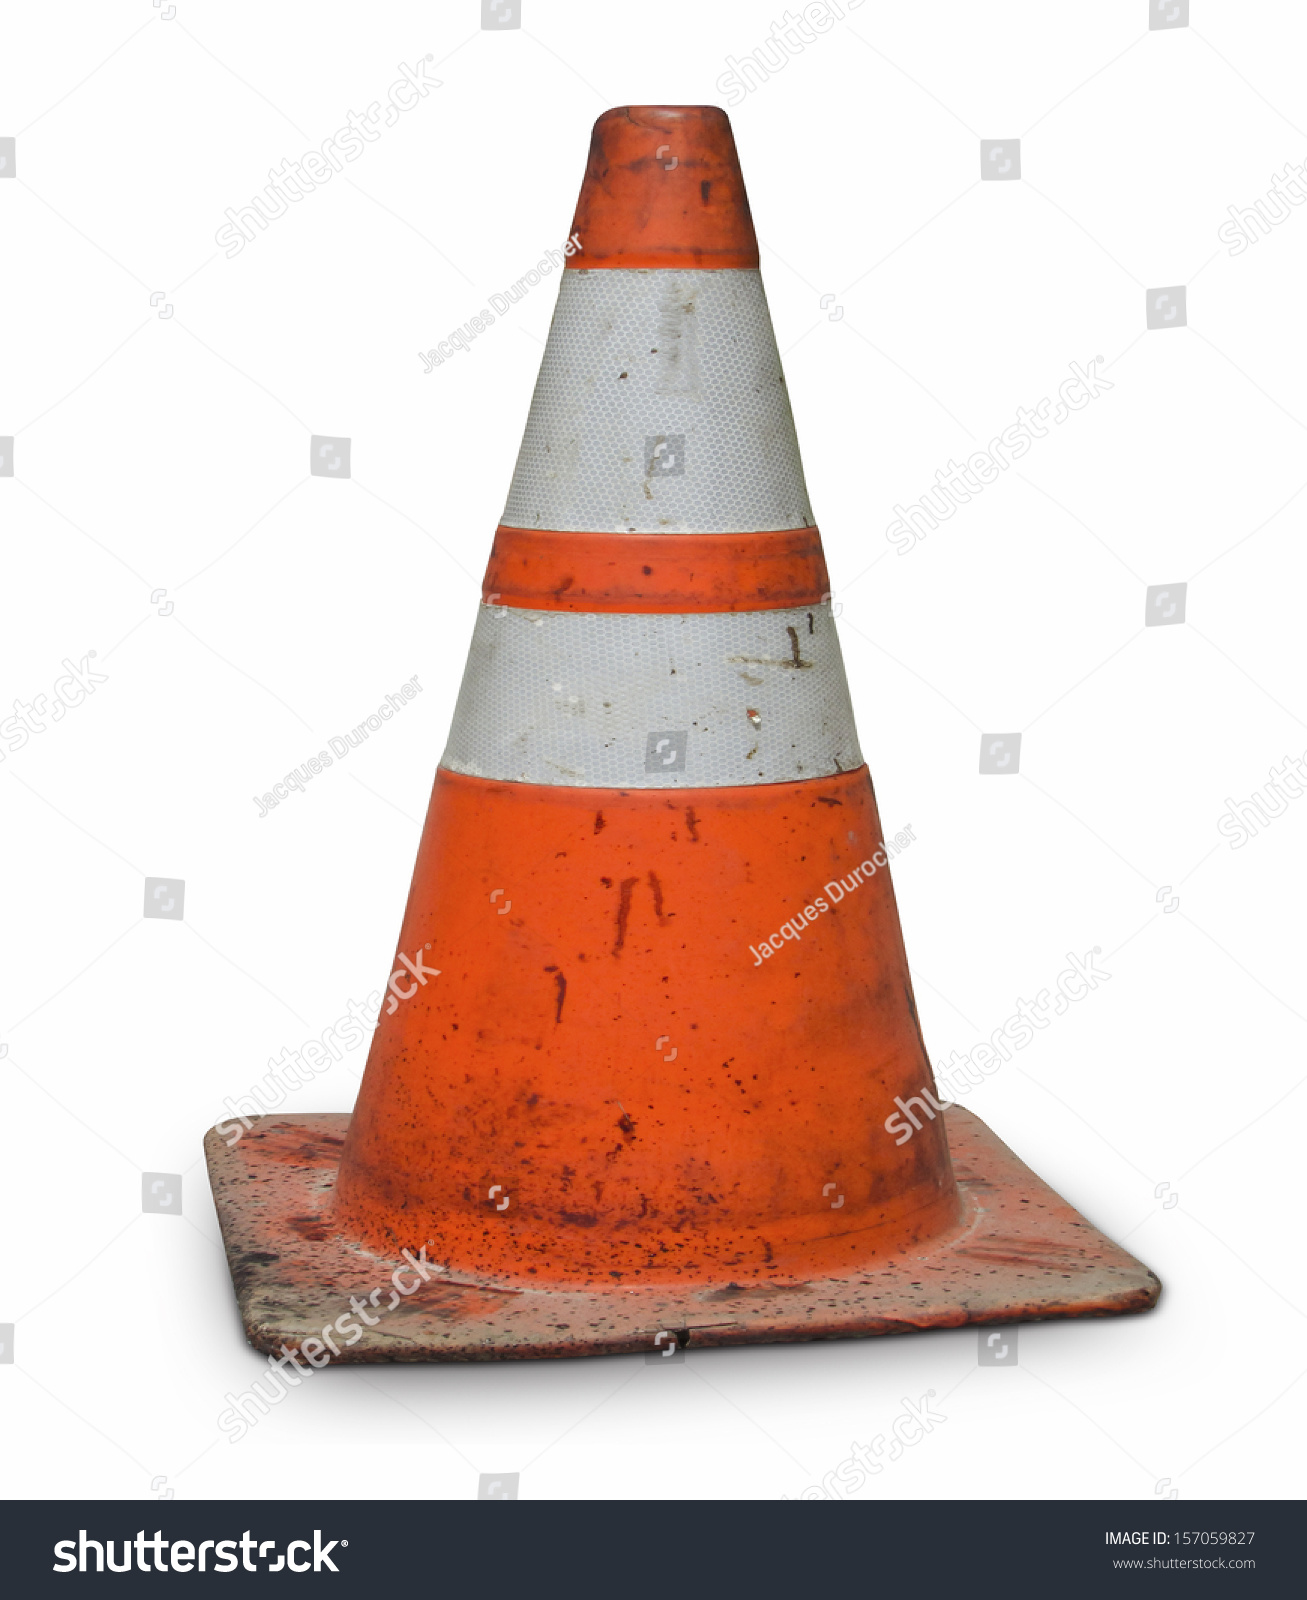 Dirty traffic cone photo